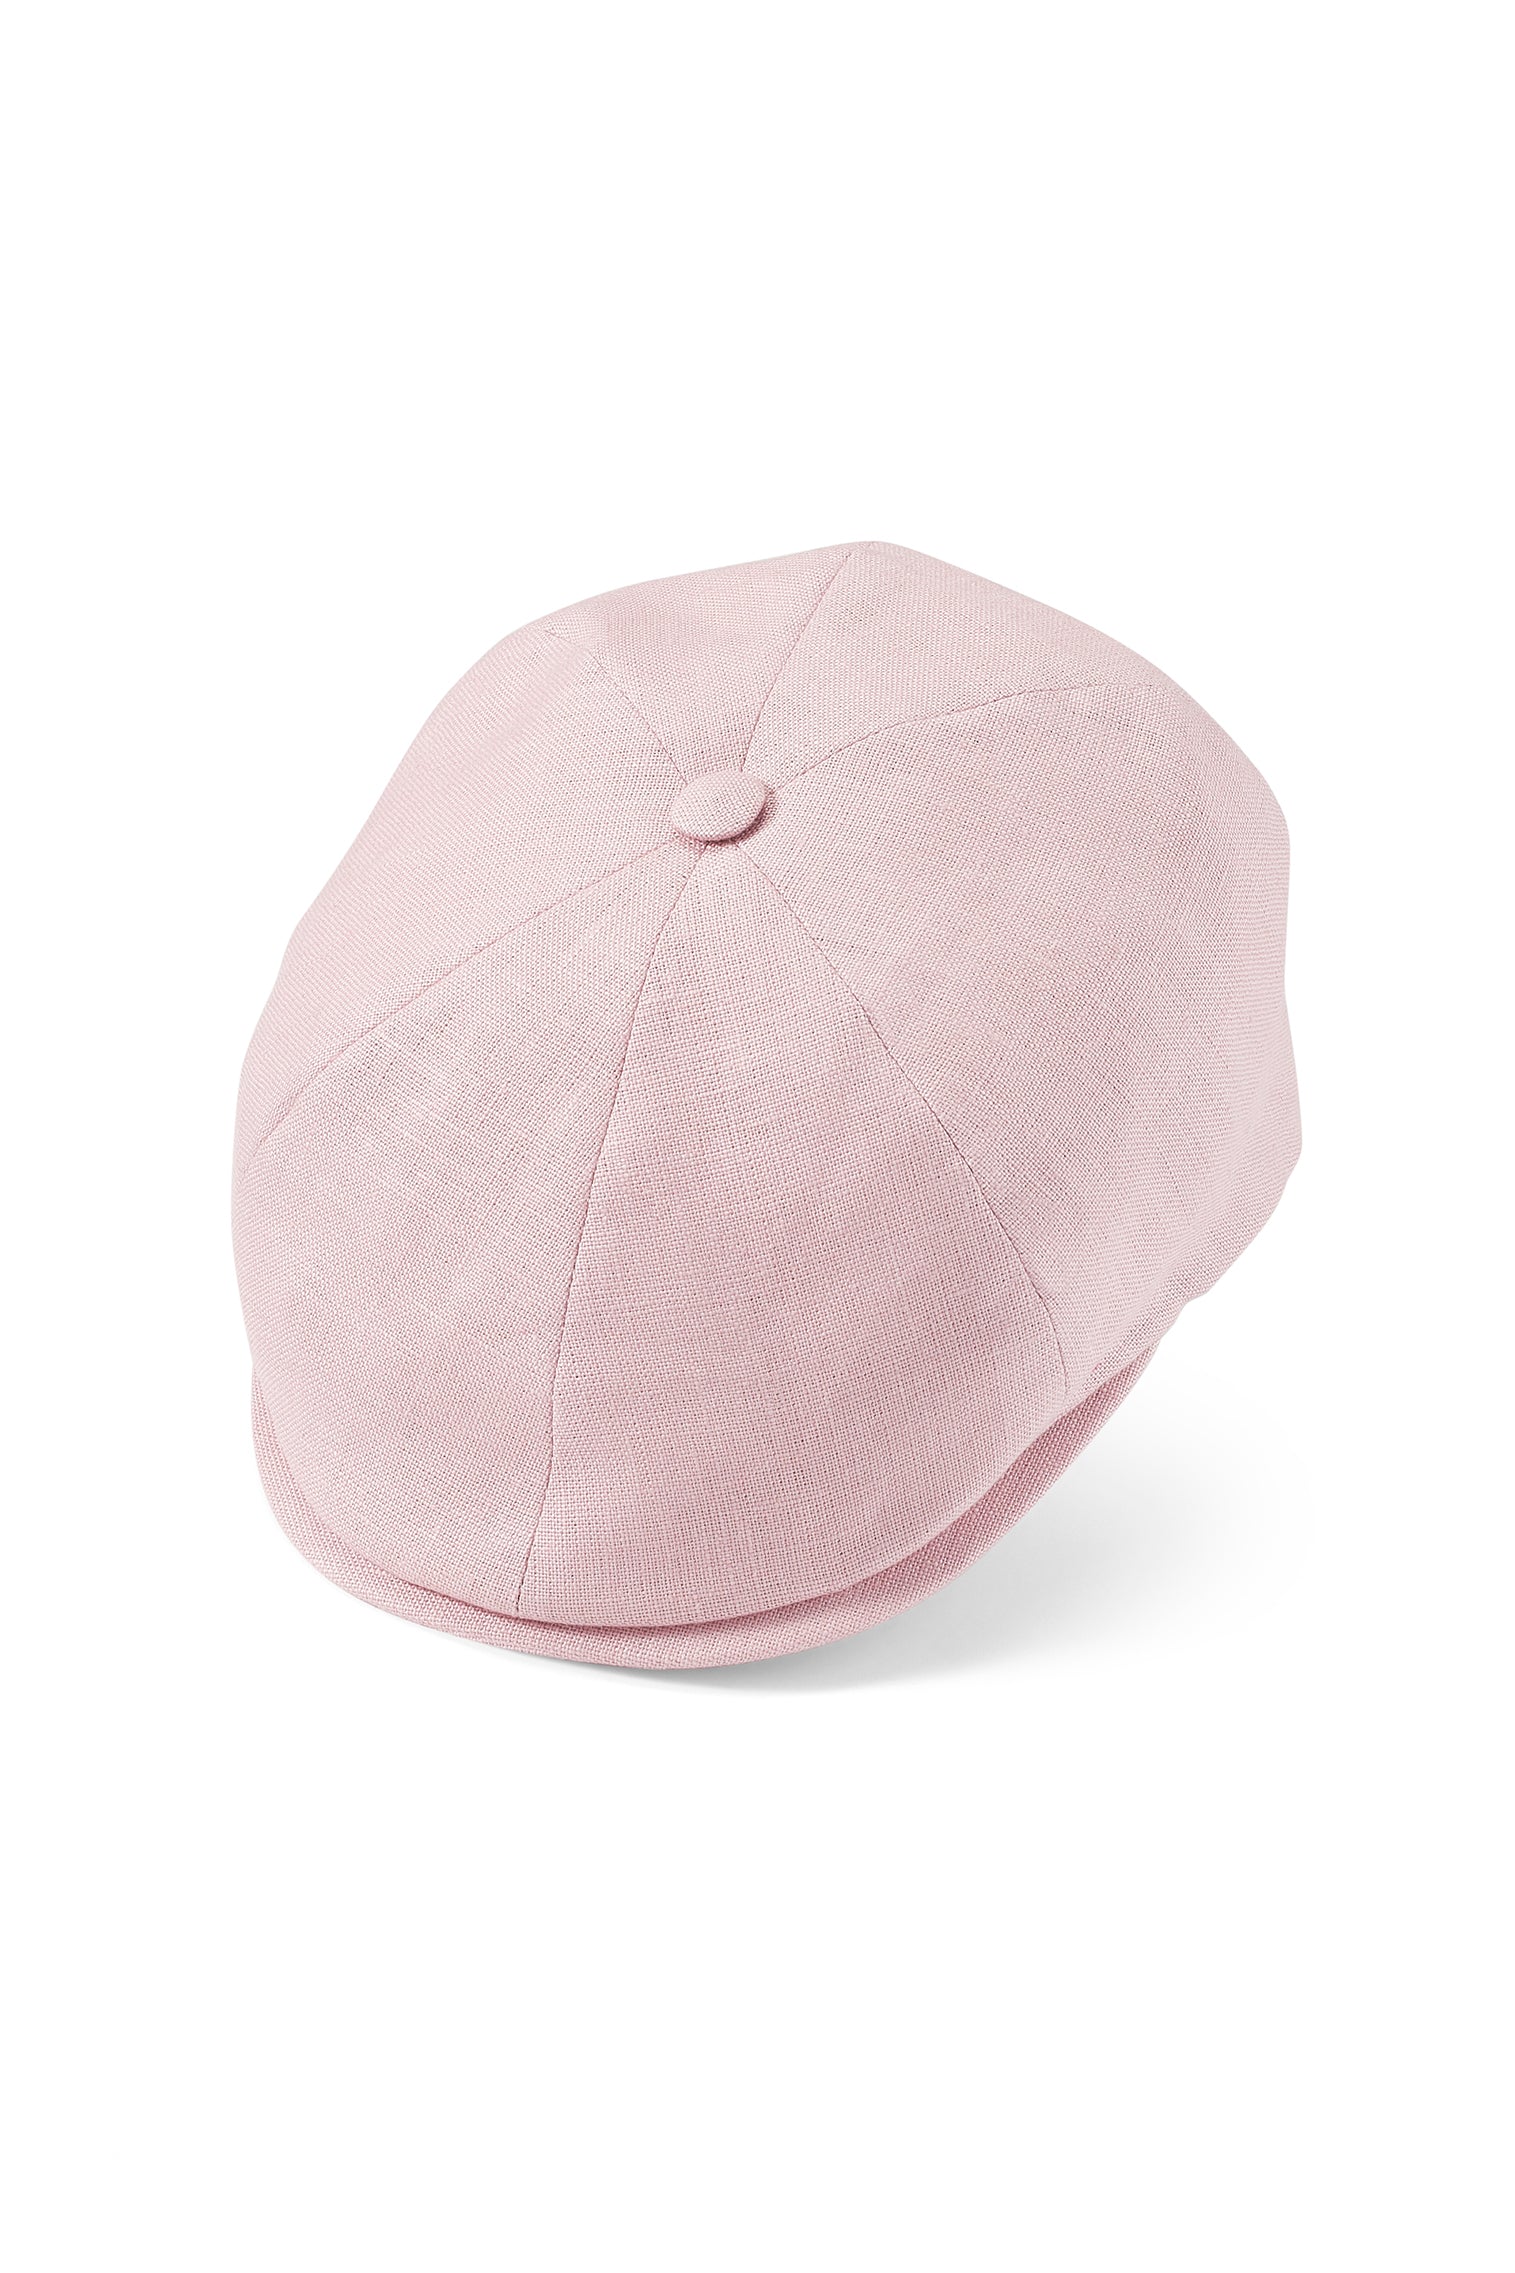 Tahoe Pink Bakerboy Cap - Men's Hats - Lock & Co. Hatters London UK